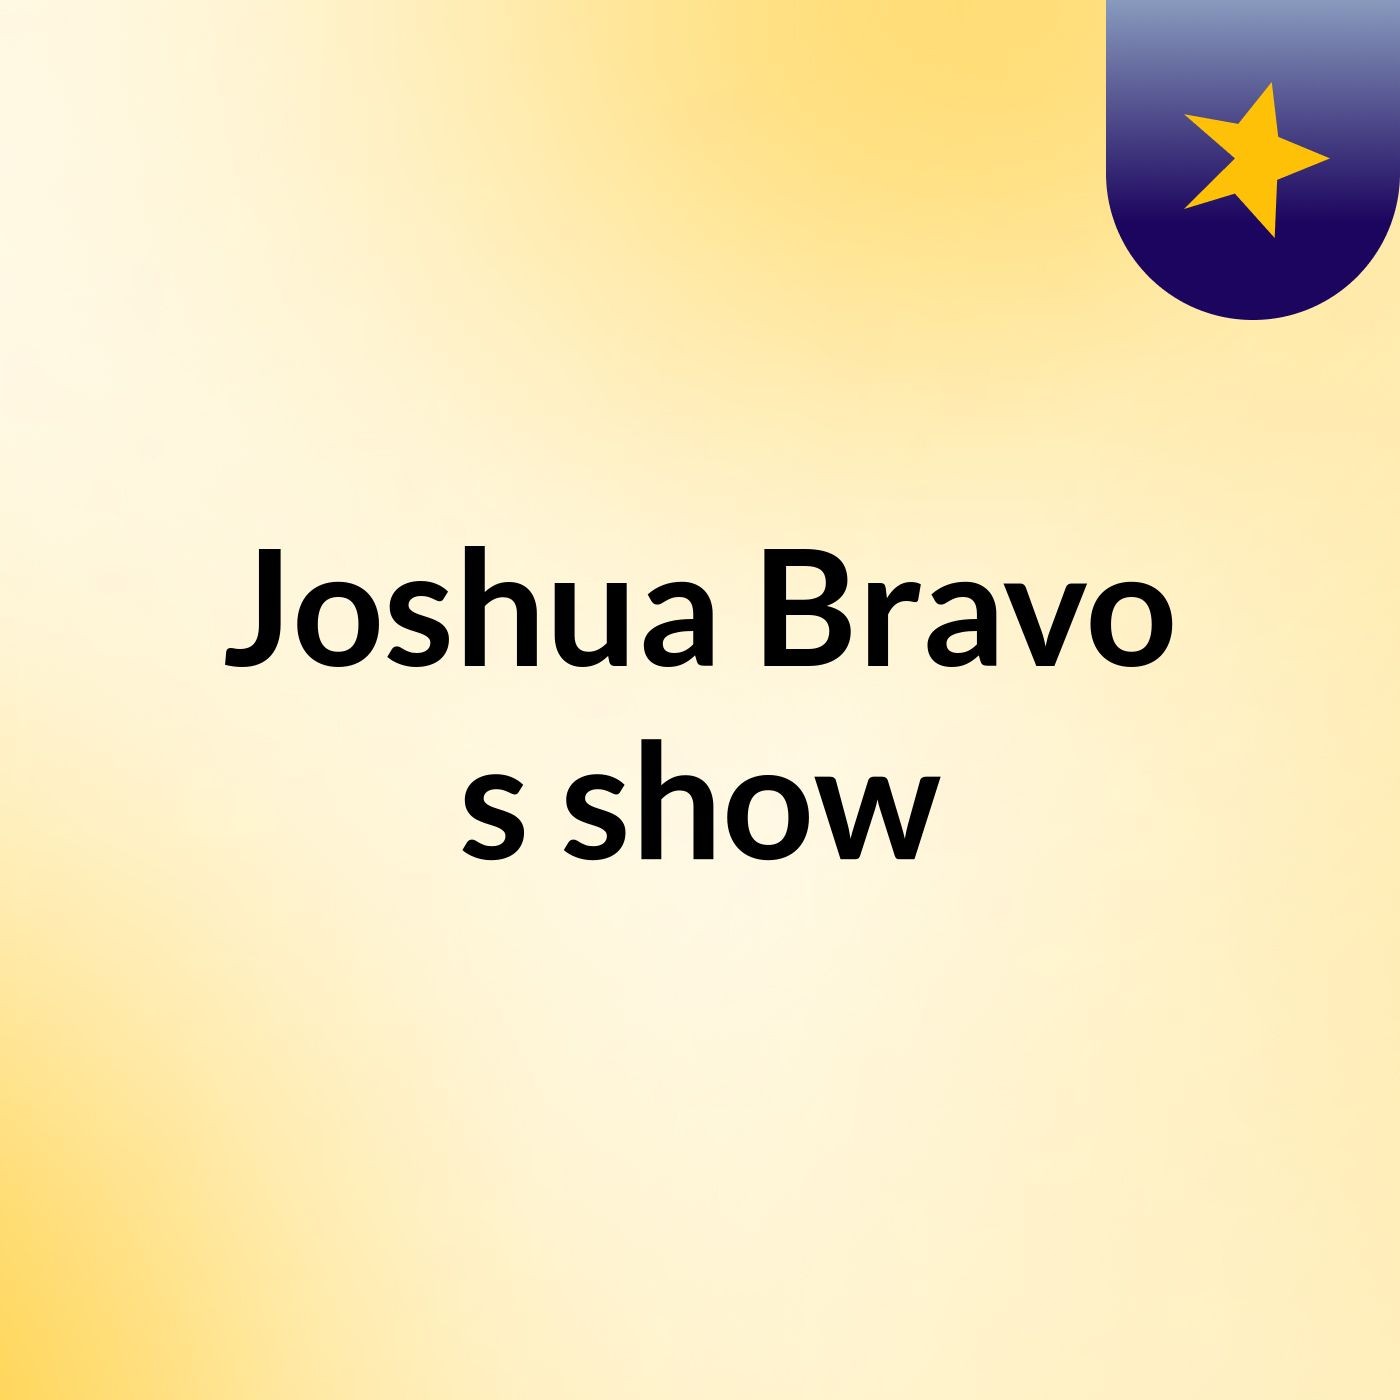 Joshua Bravo's show